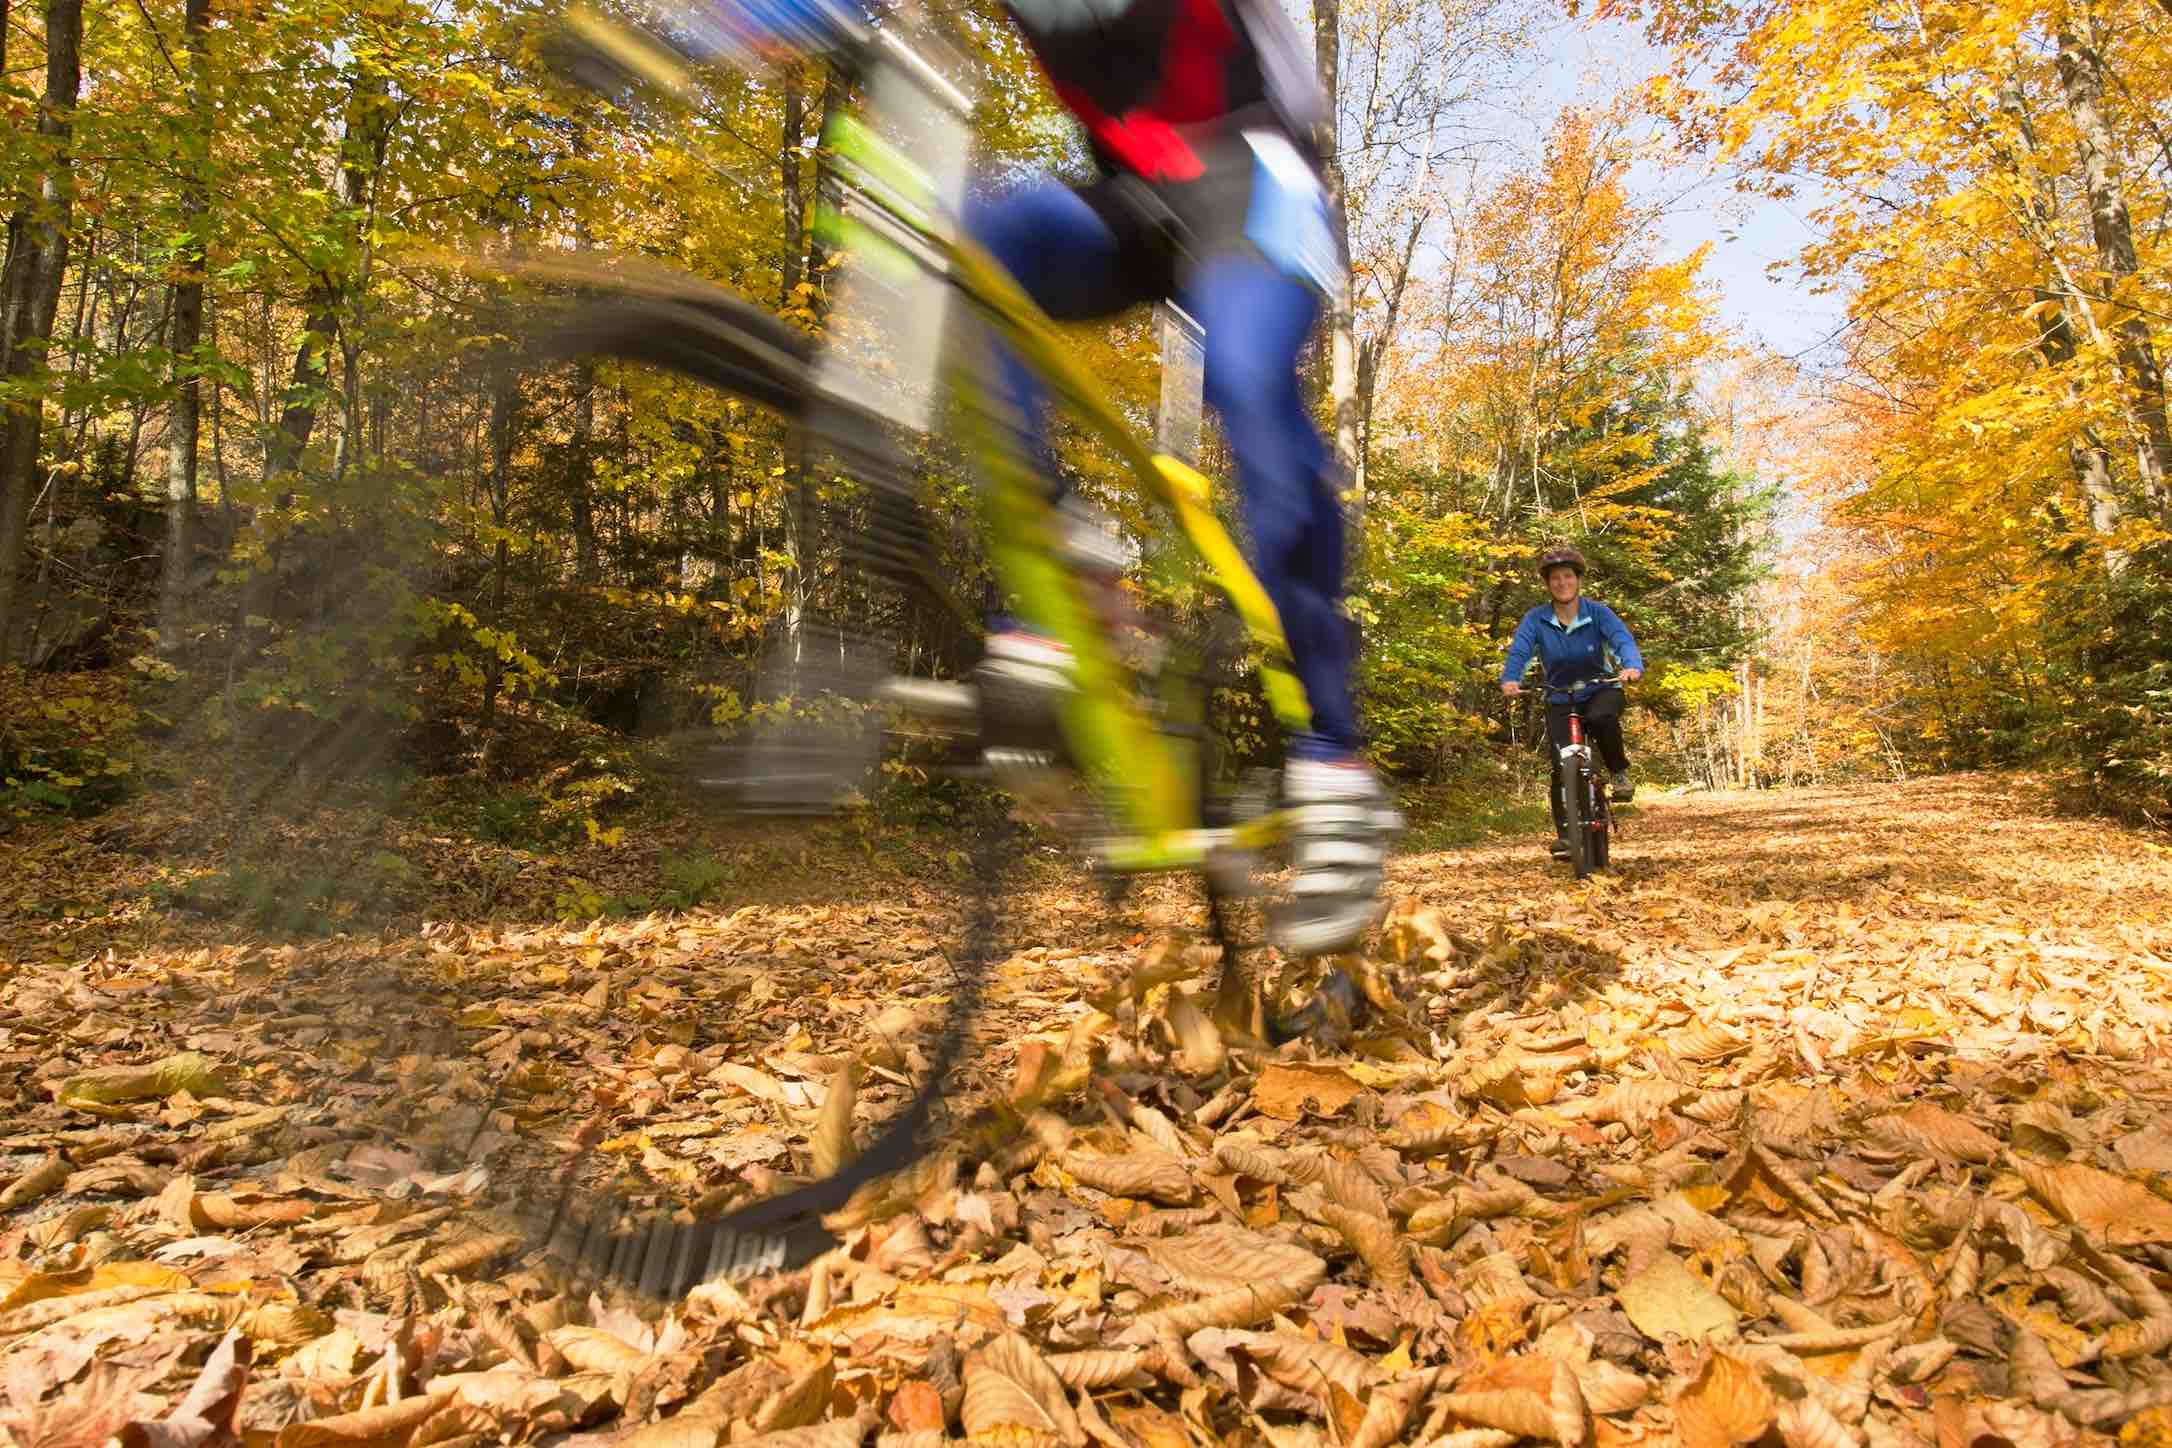 Orillia People Biking on trails in the fall